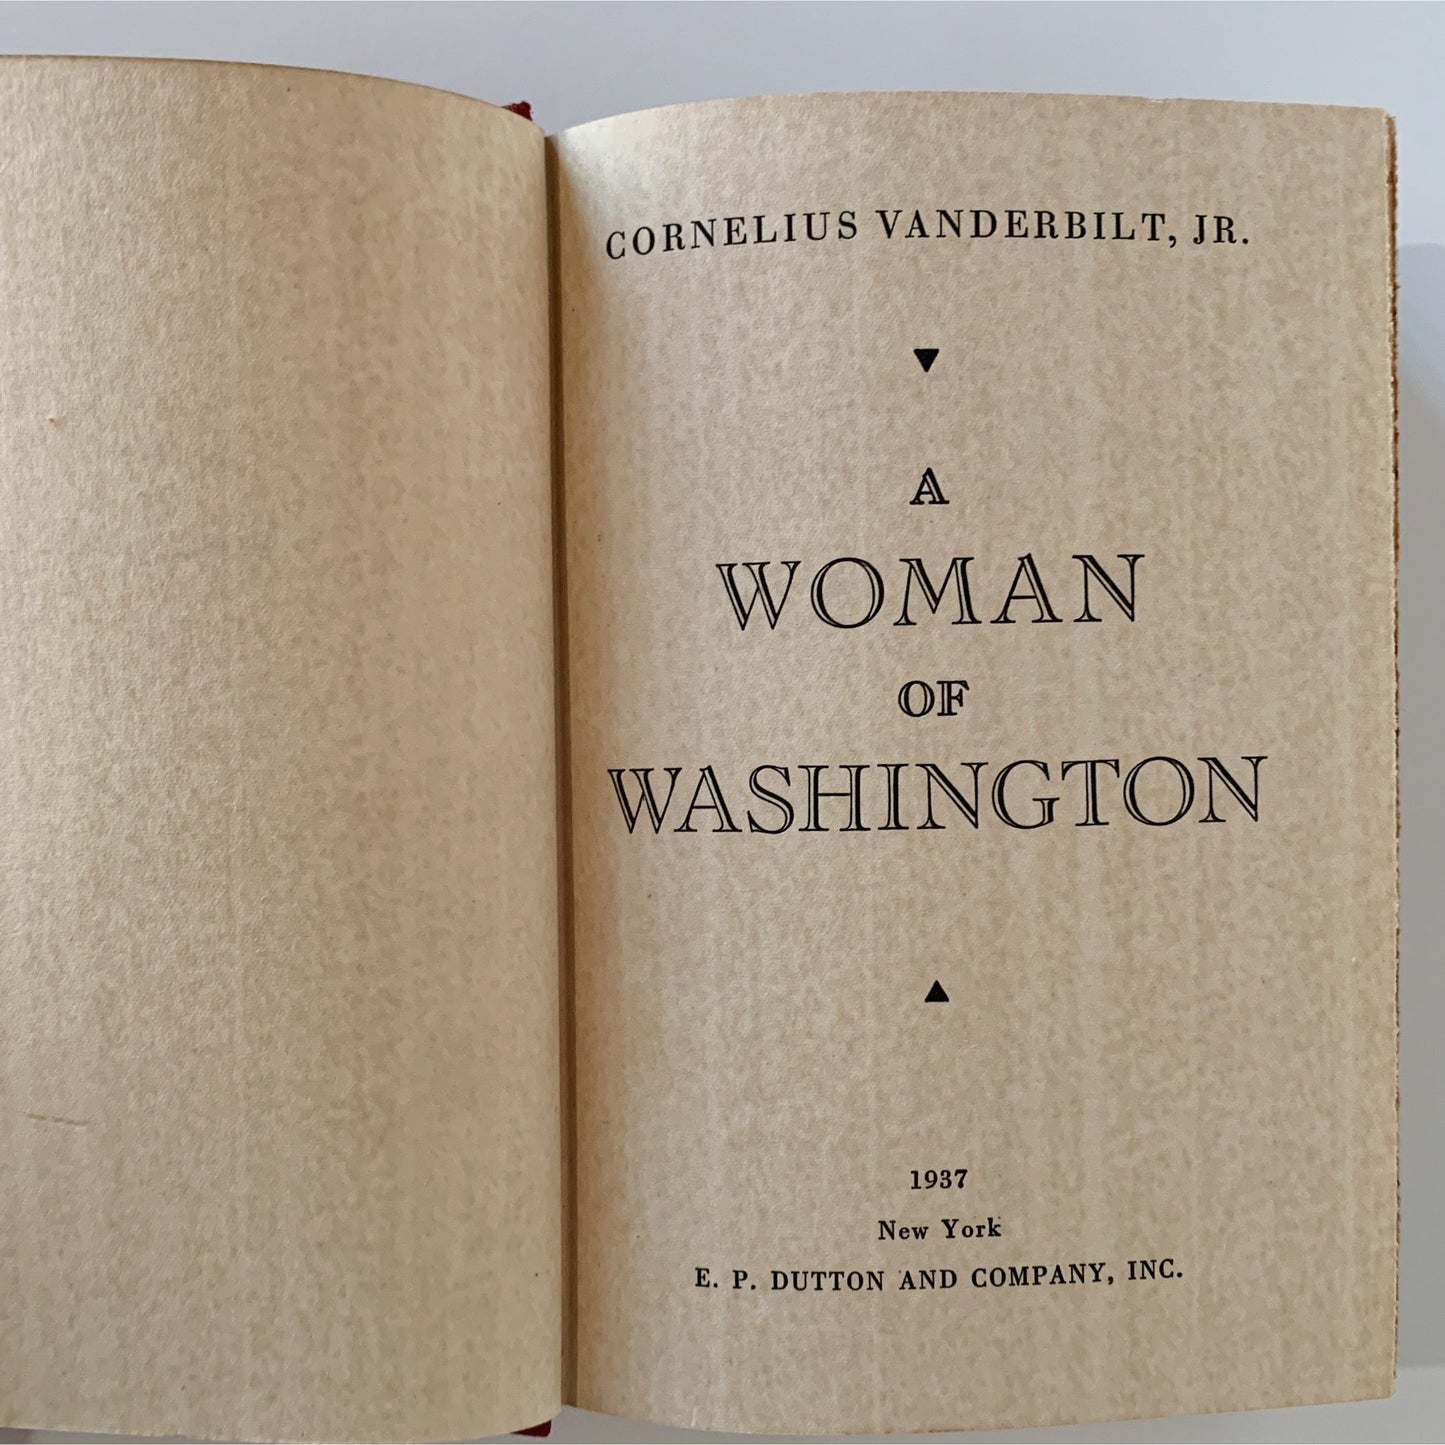 A Woman of Washington, Cornelius Vanderbilt, Jr, 1937